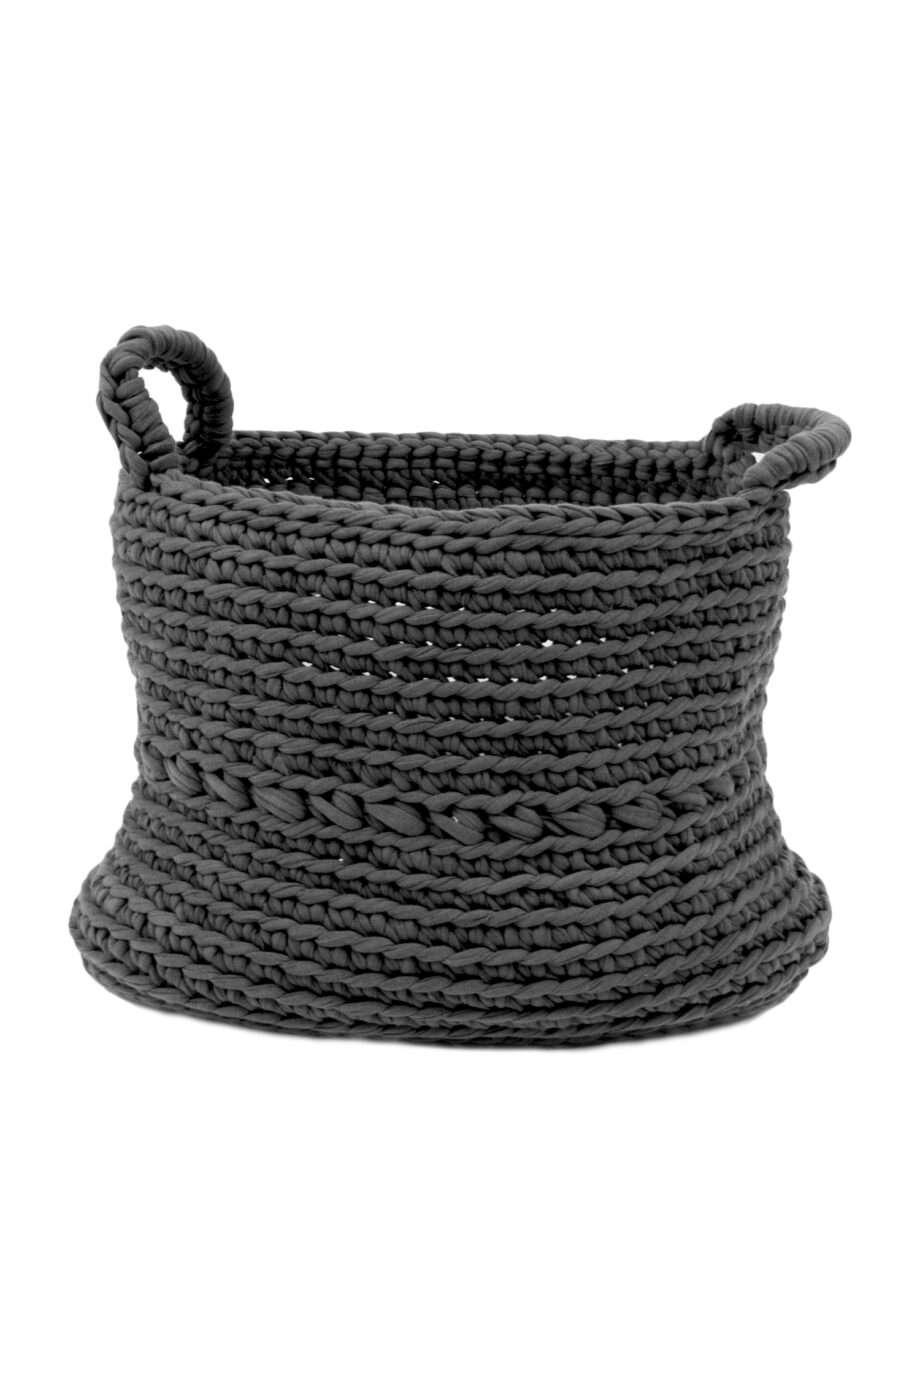 basic anthracite crochet cotton basket large